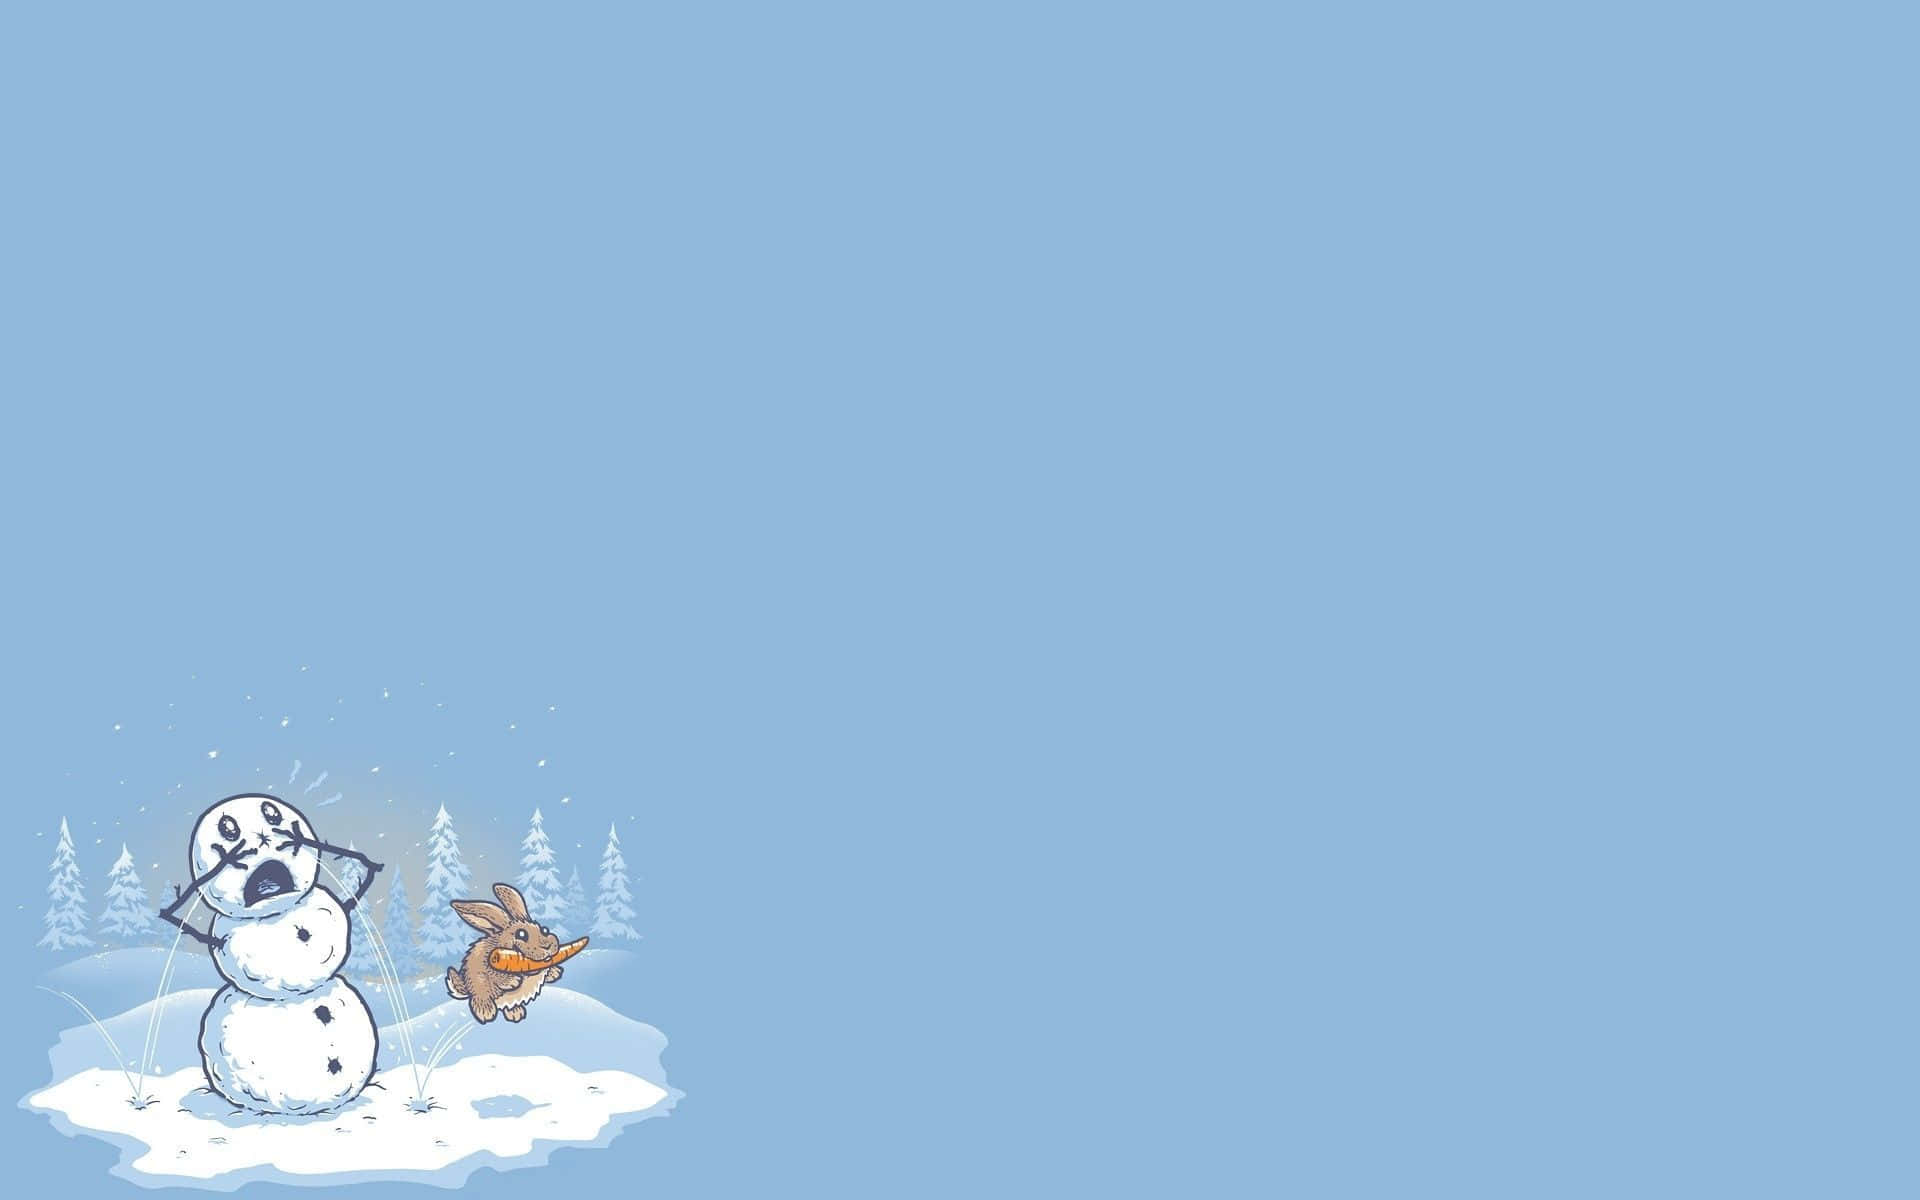 Snowmanand Dog Winter Fun Wallpaper